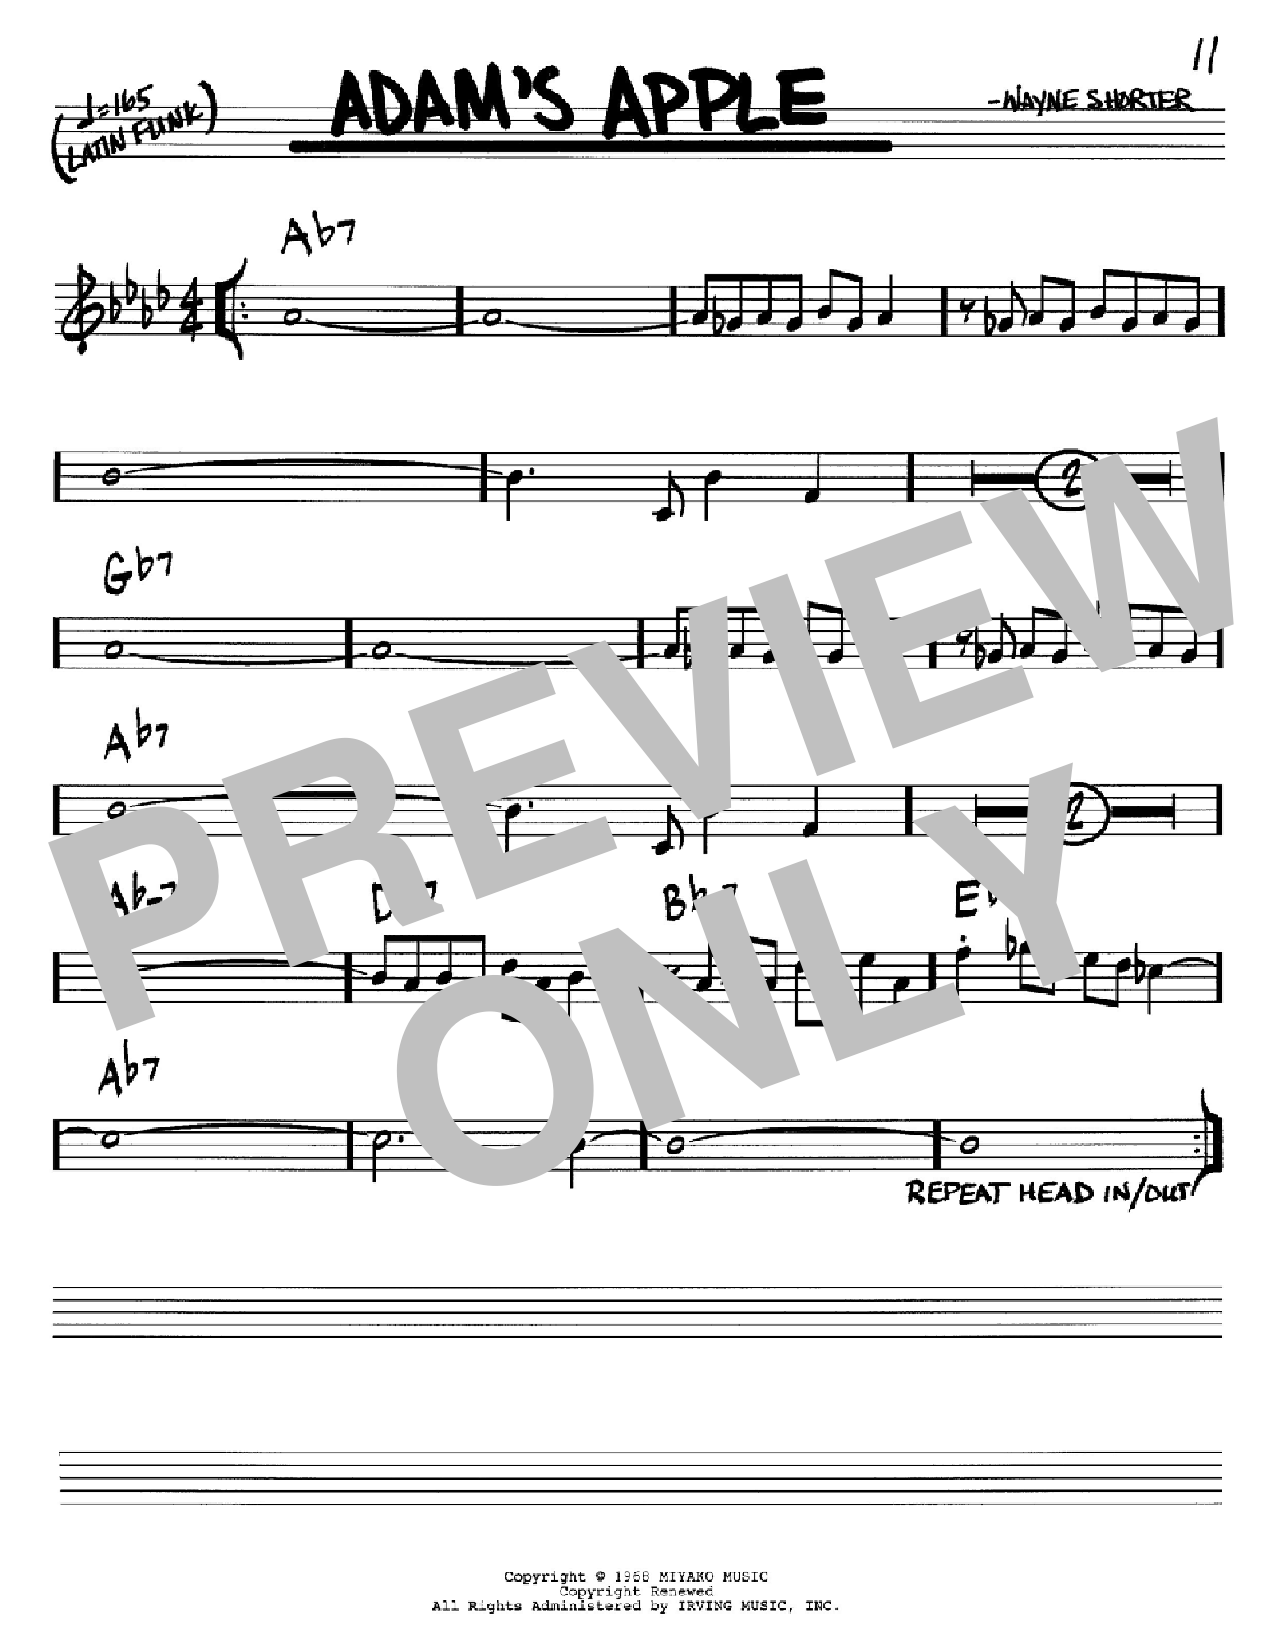 Wayne Shorter Adam's Apple sheet music notes and chords arranged for Tenor Sax Transcription